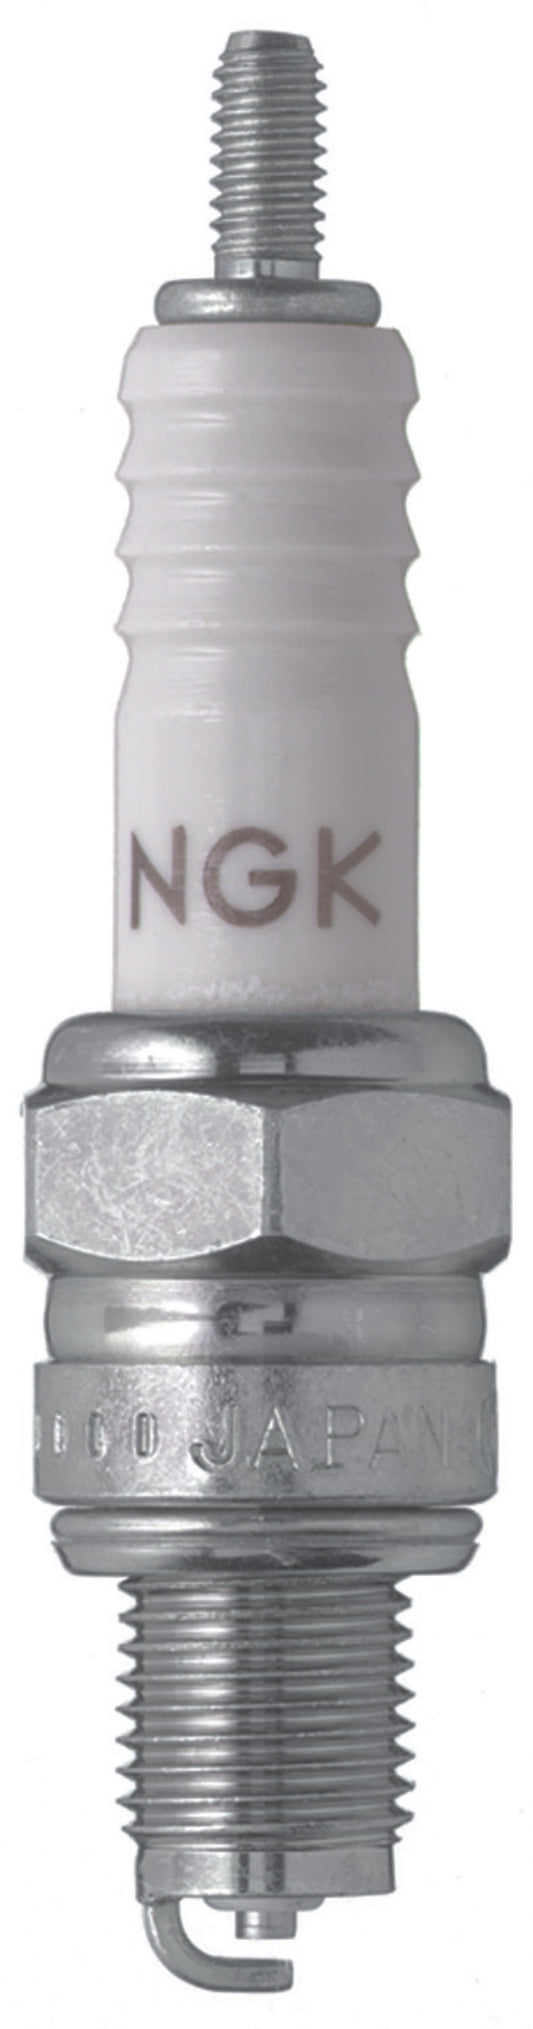 NGK Standard Spark Plug Box of 4 (C7HSA)